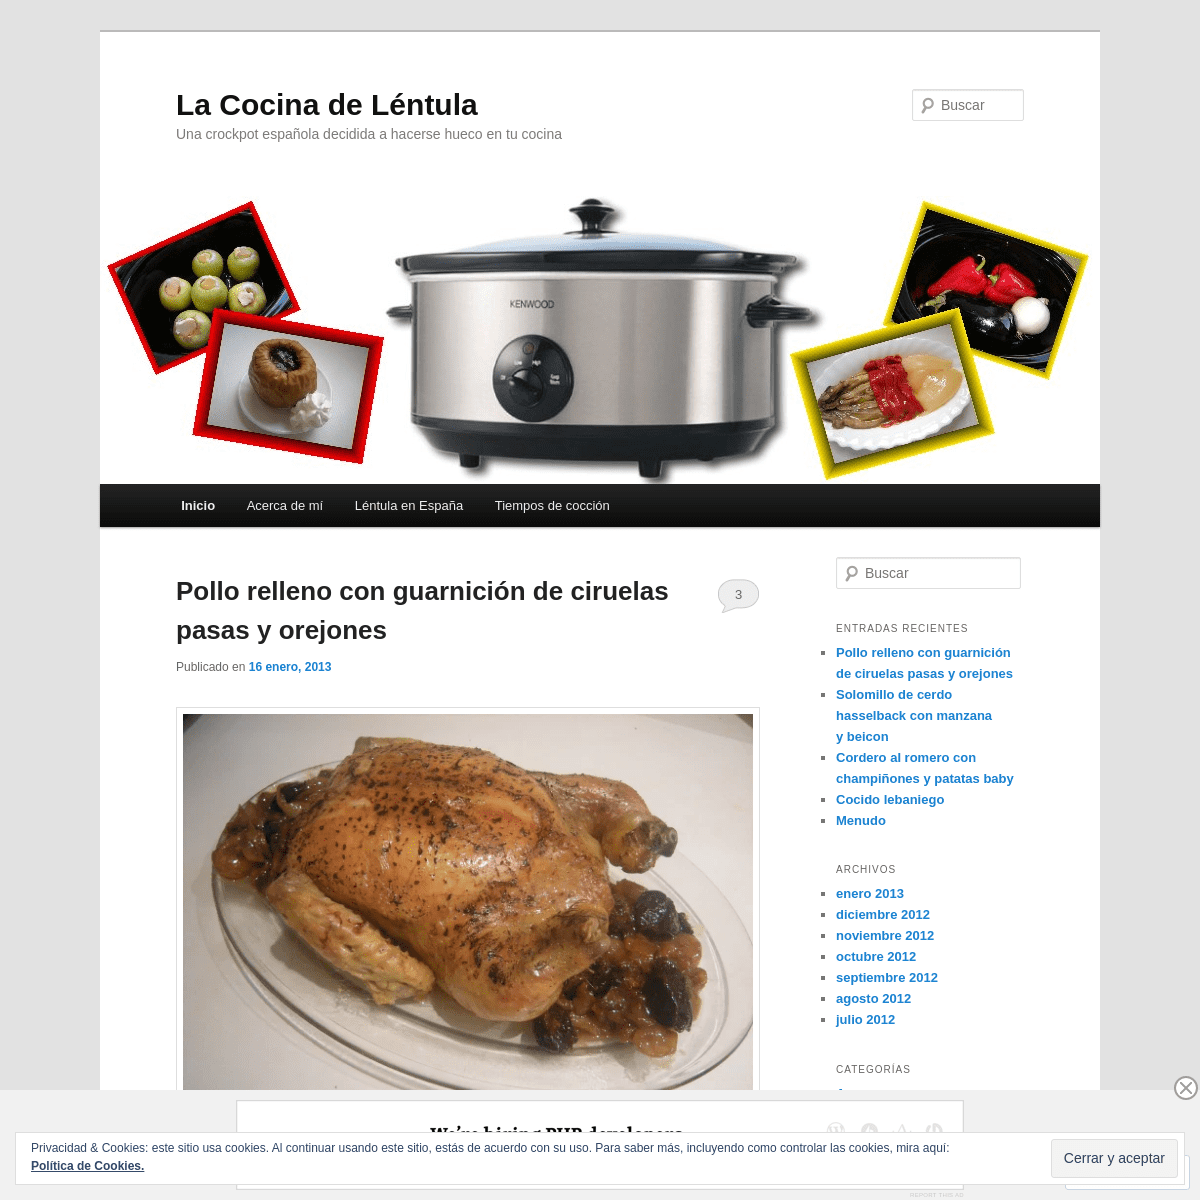 La Cocina de LÃ©ntula - Una crockpot espaÃ±ola decidida a hacerse hueco en tu cocina